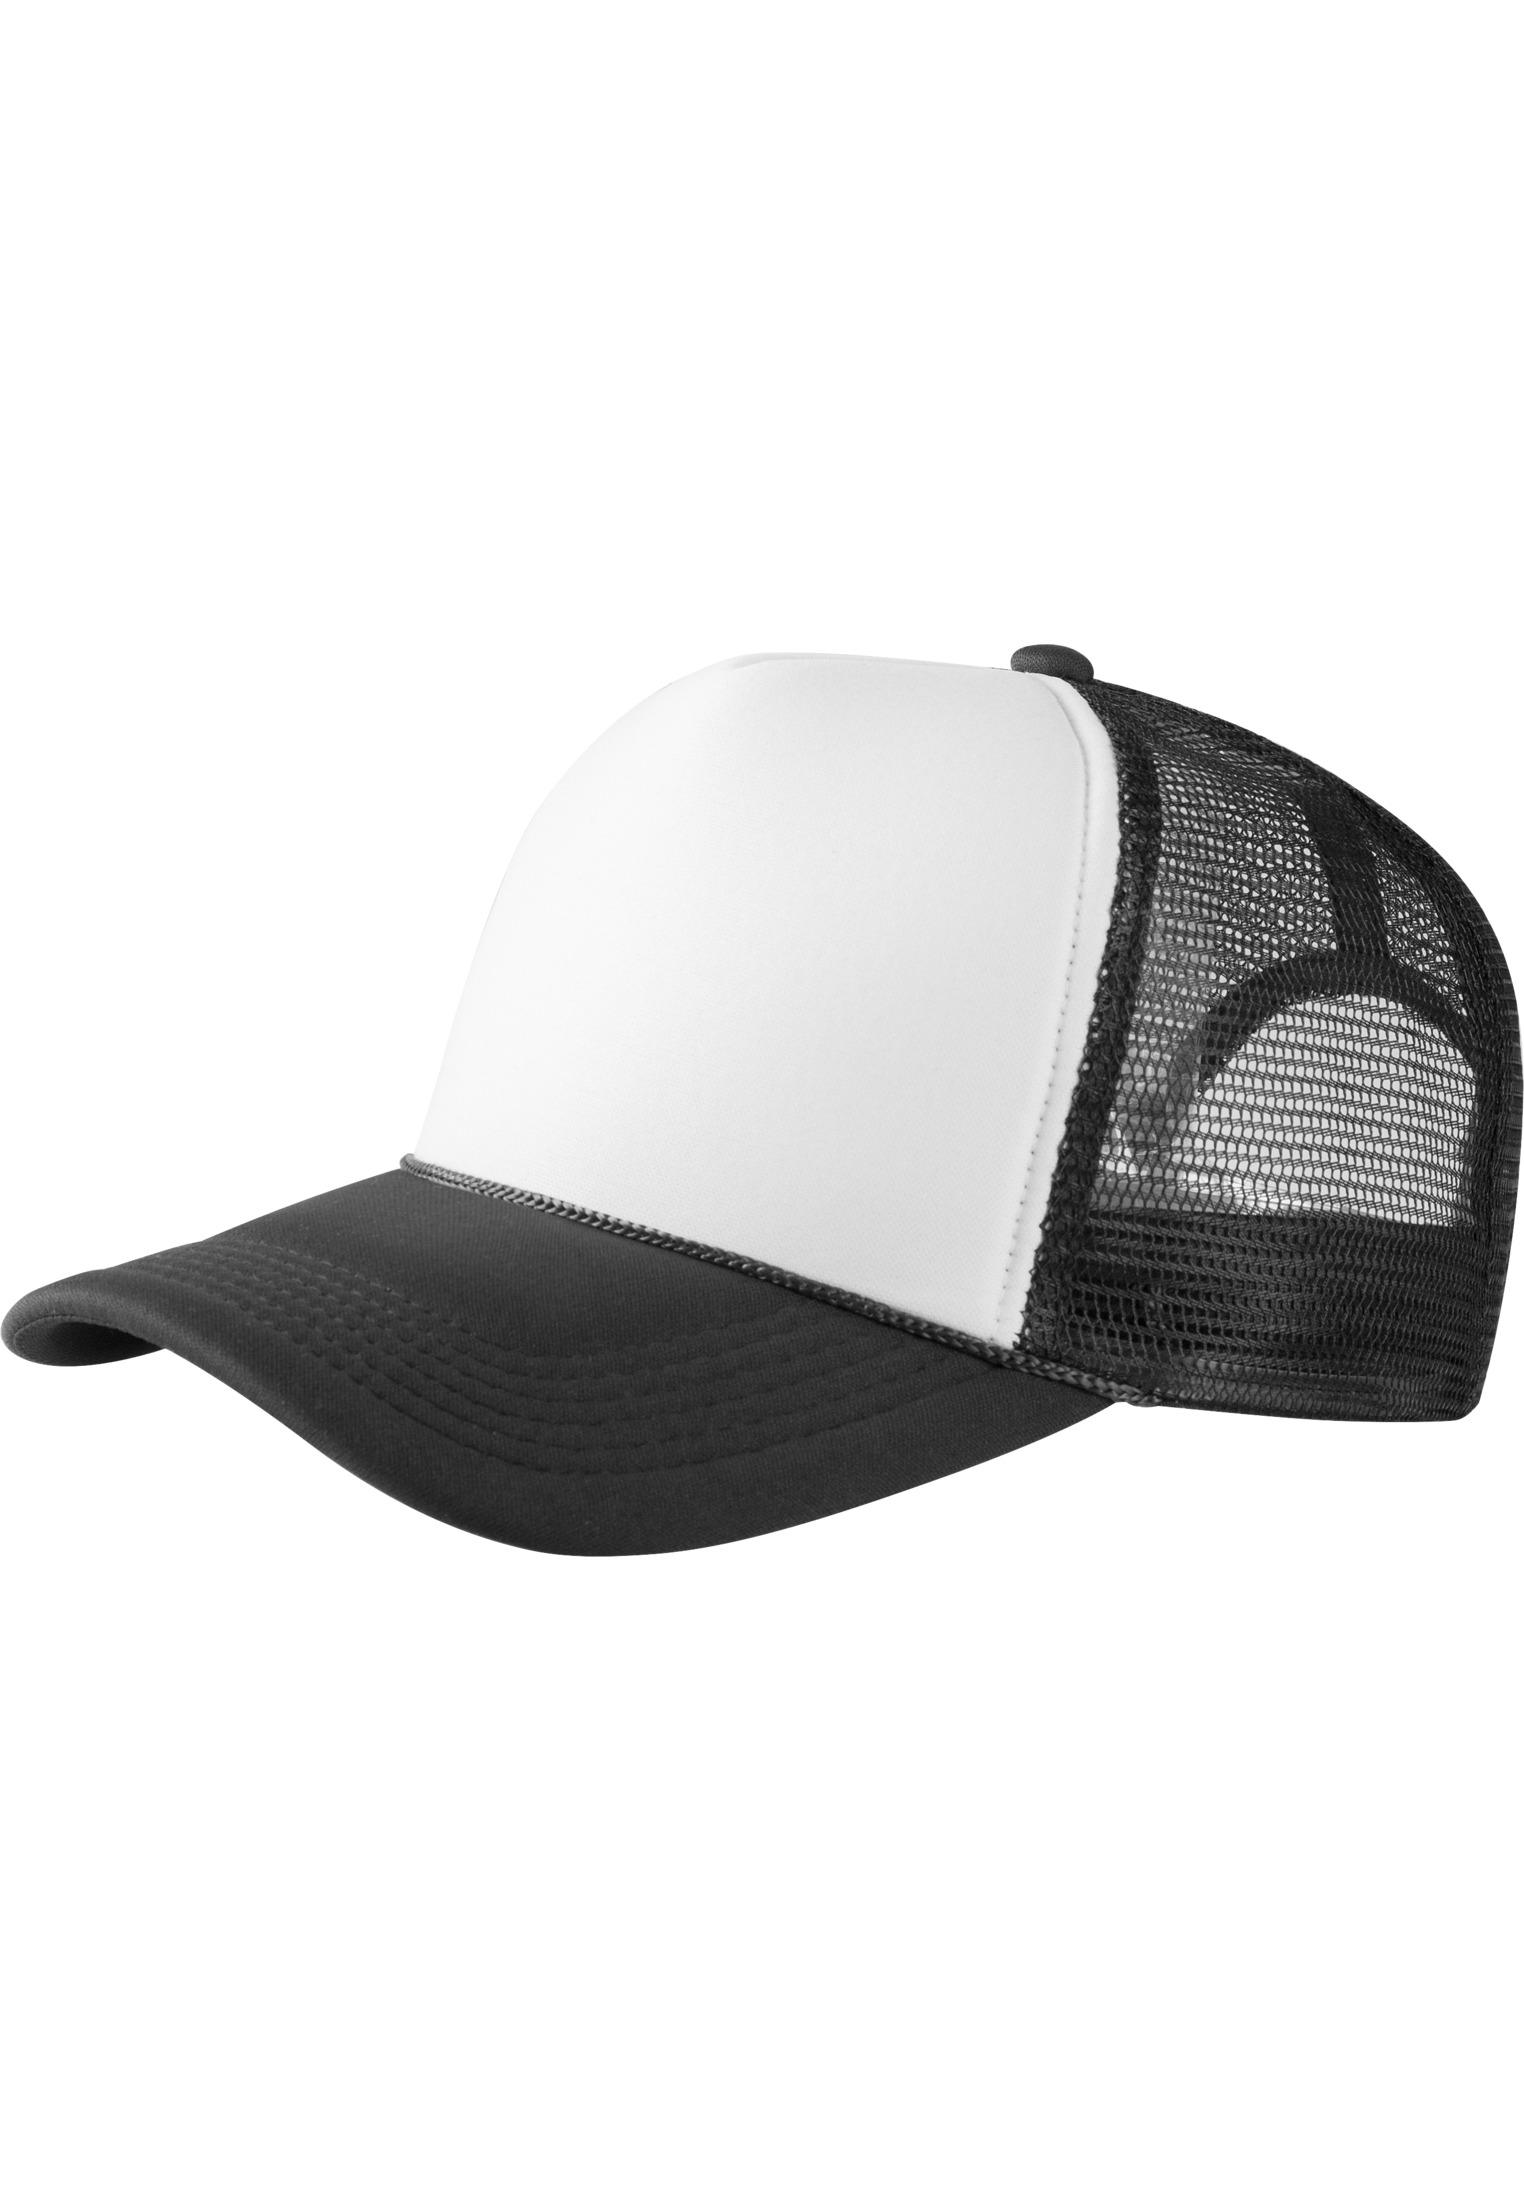 Baseball Cap Trucker high profile-10236 | Snapback Caps